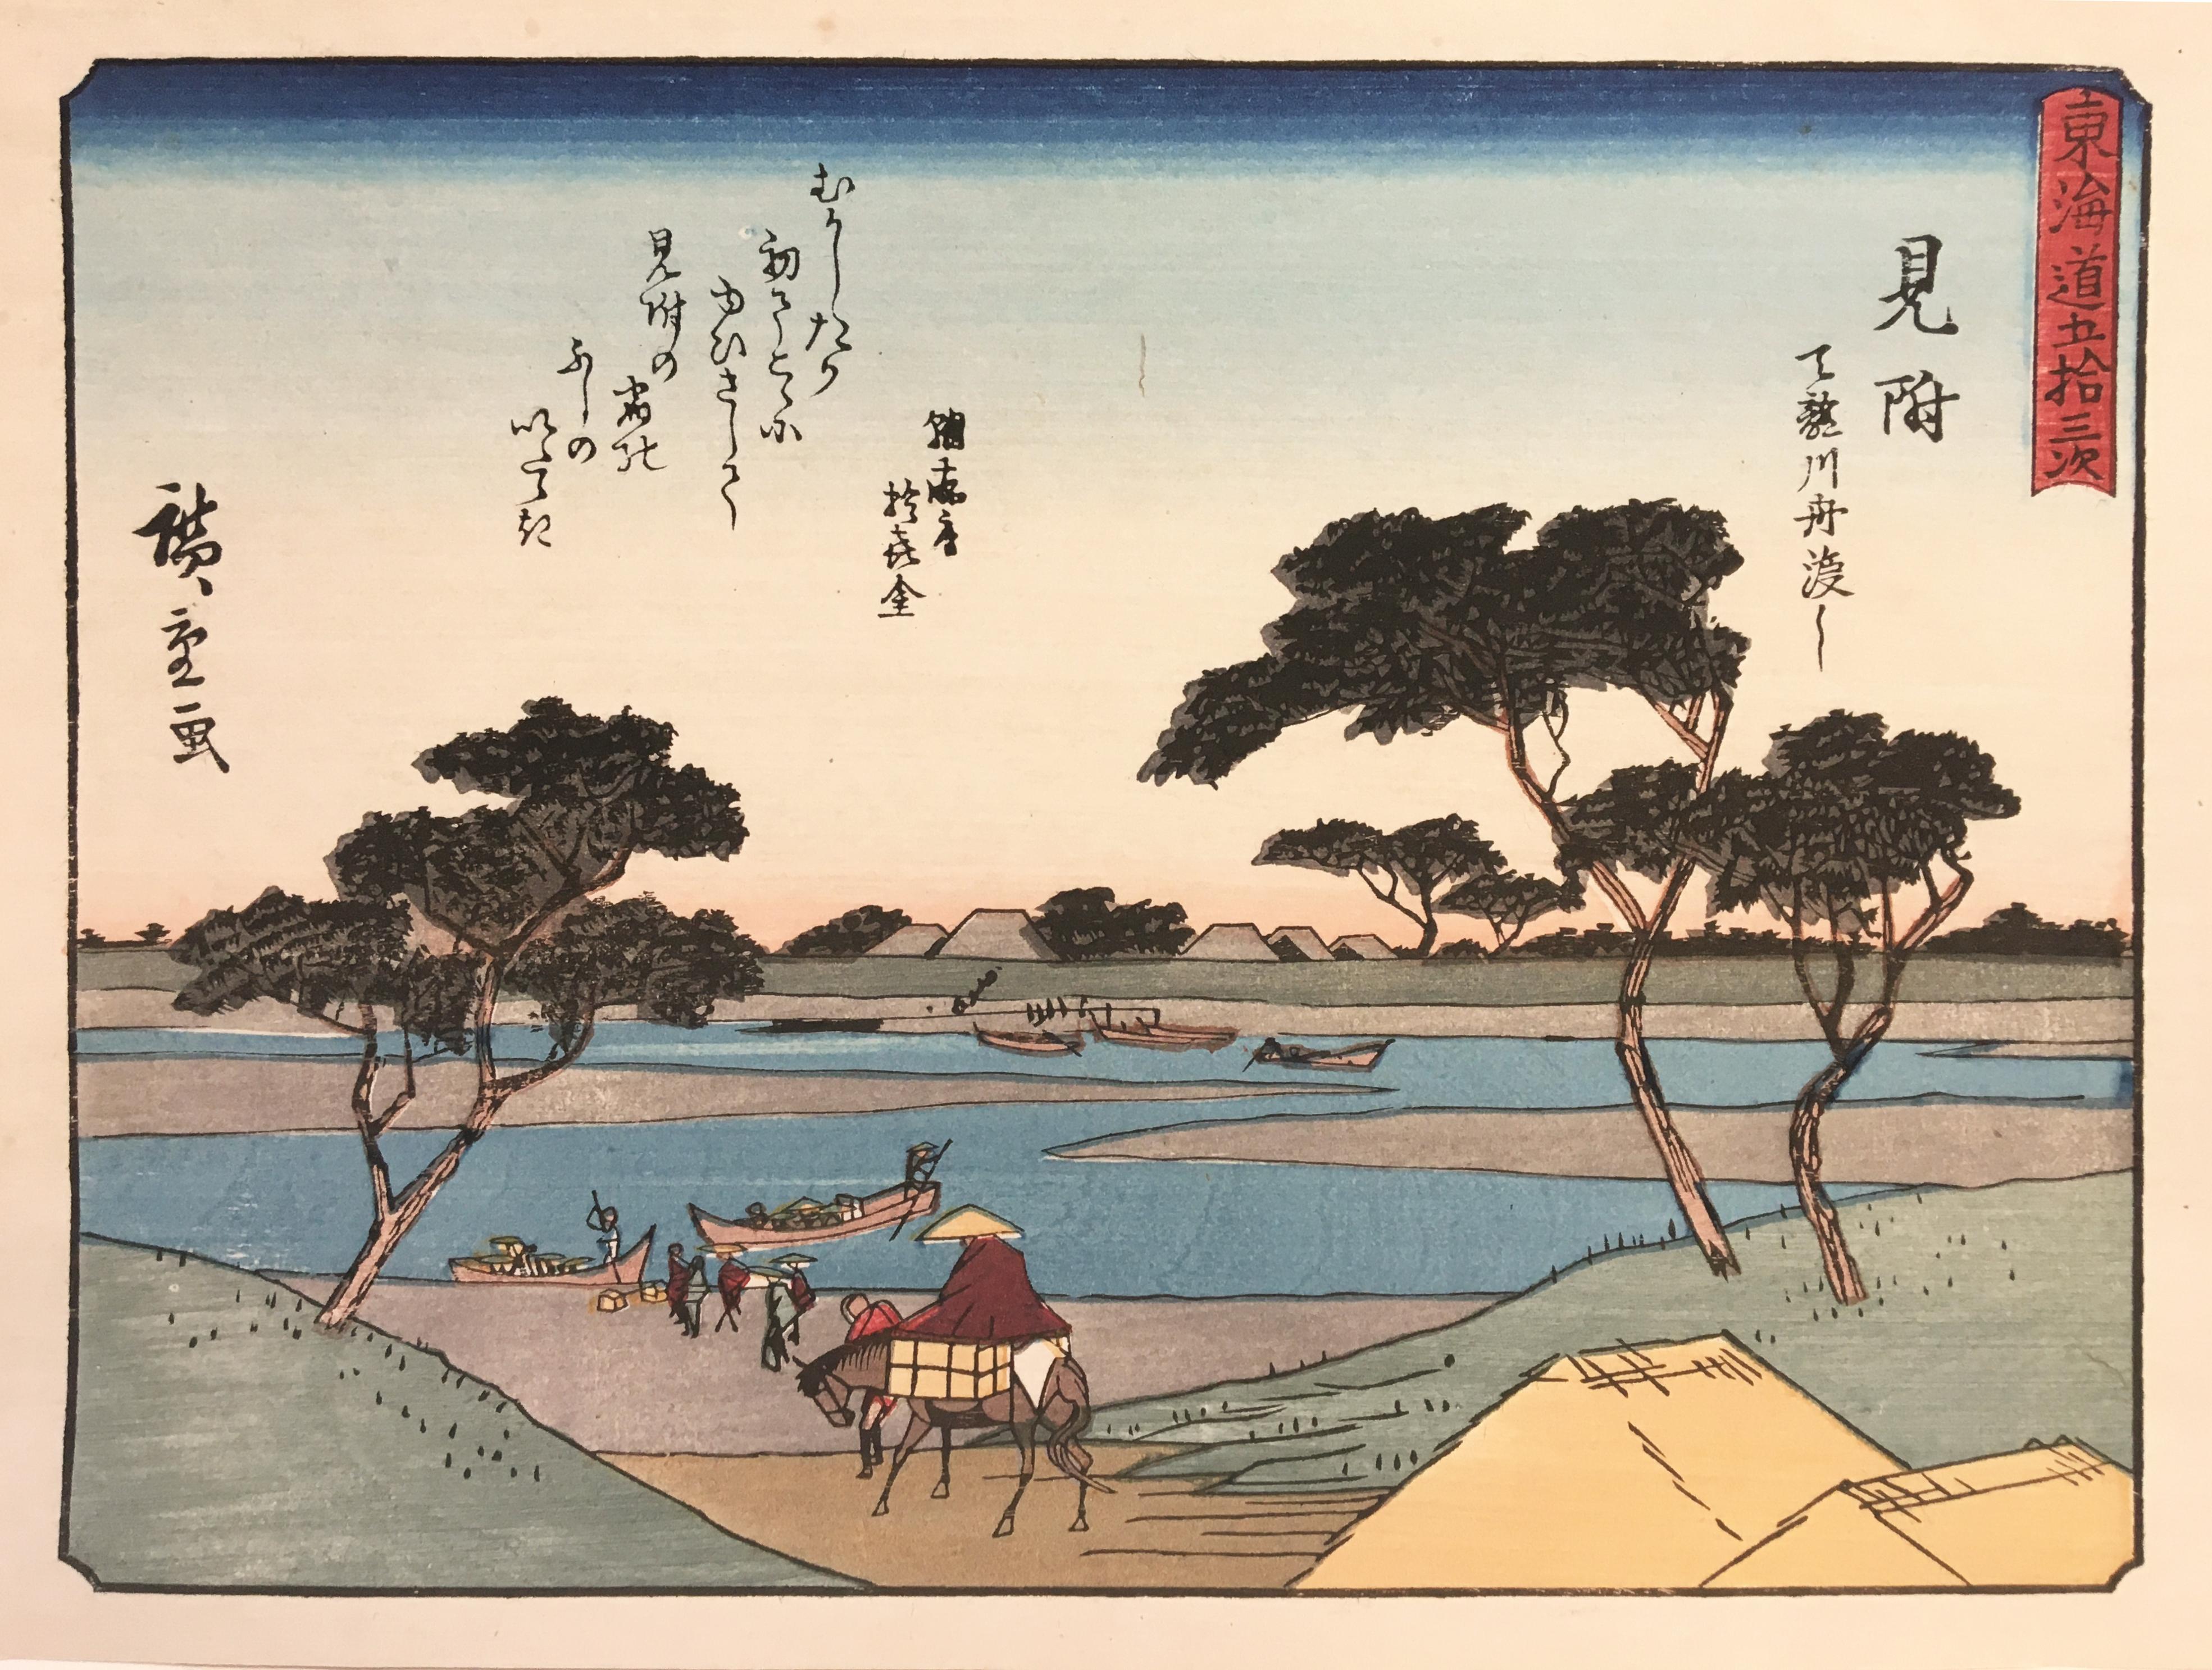 Utagawa Hiroshige (Ando Hiroshige) Landscape Print - 'View of Mitsuke', After Utagawa Hiroshige, Ukiyo-E Woodblock, Tokaido, Edo